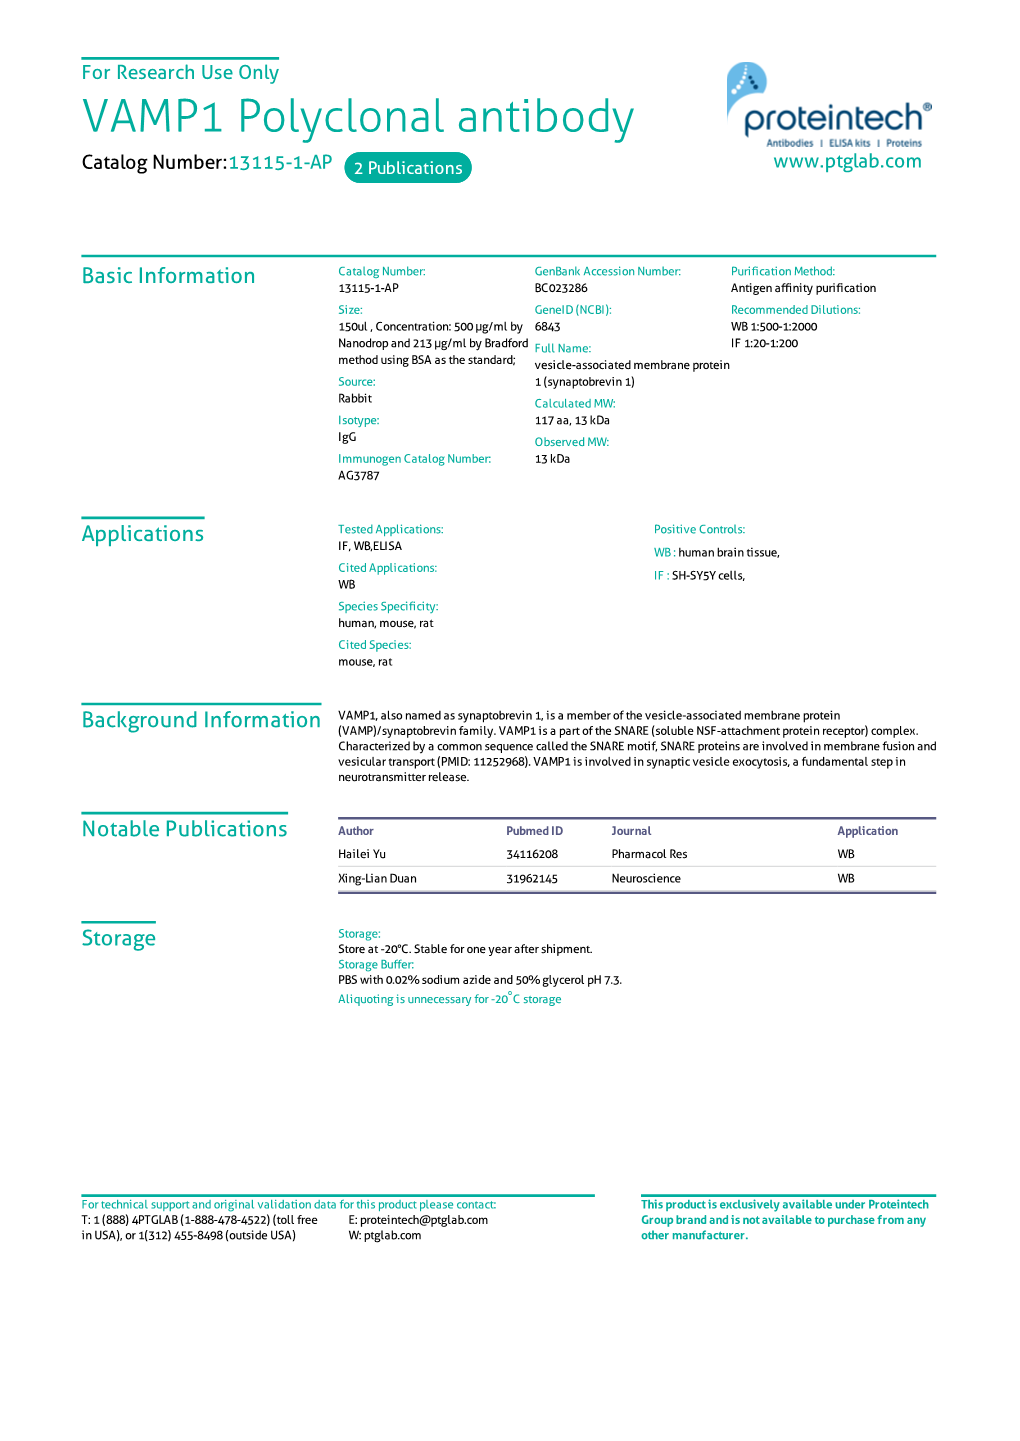 VAMP1 Polyclonal Antibody Catalog Number:13115-1-AP 2 Publications